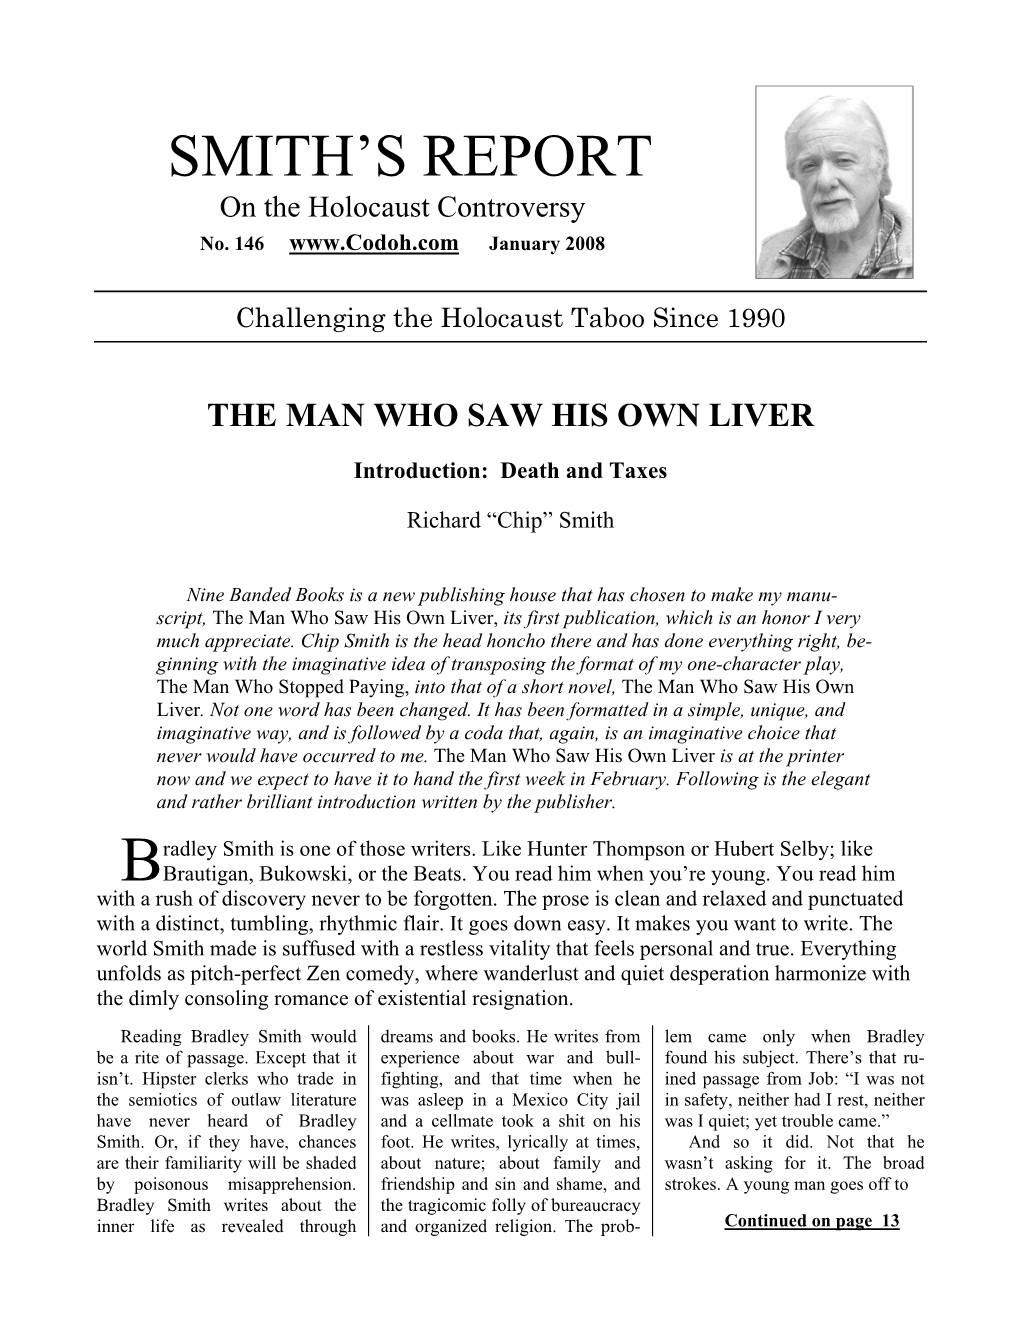 Smith's Report, No